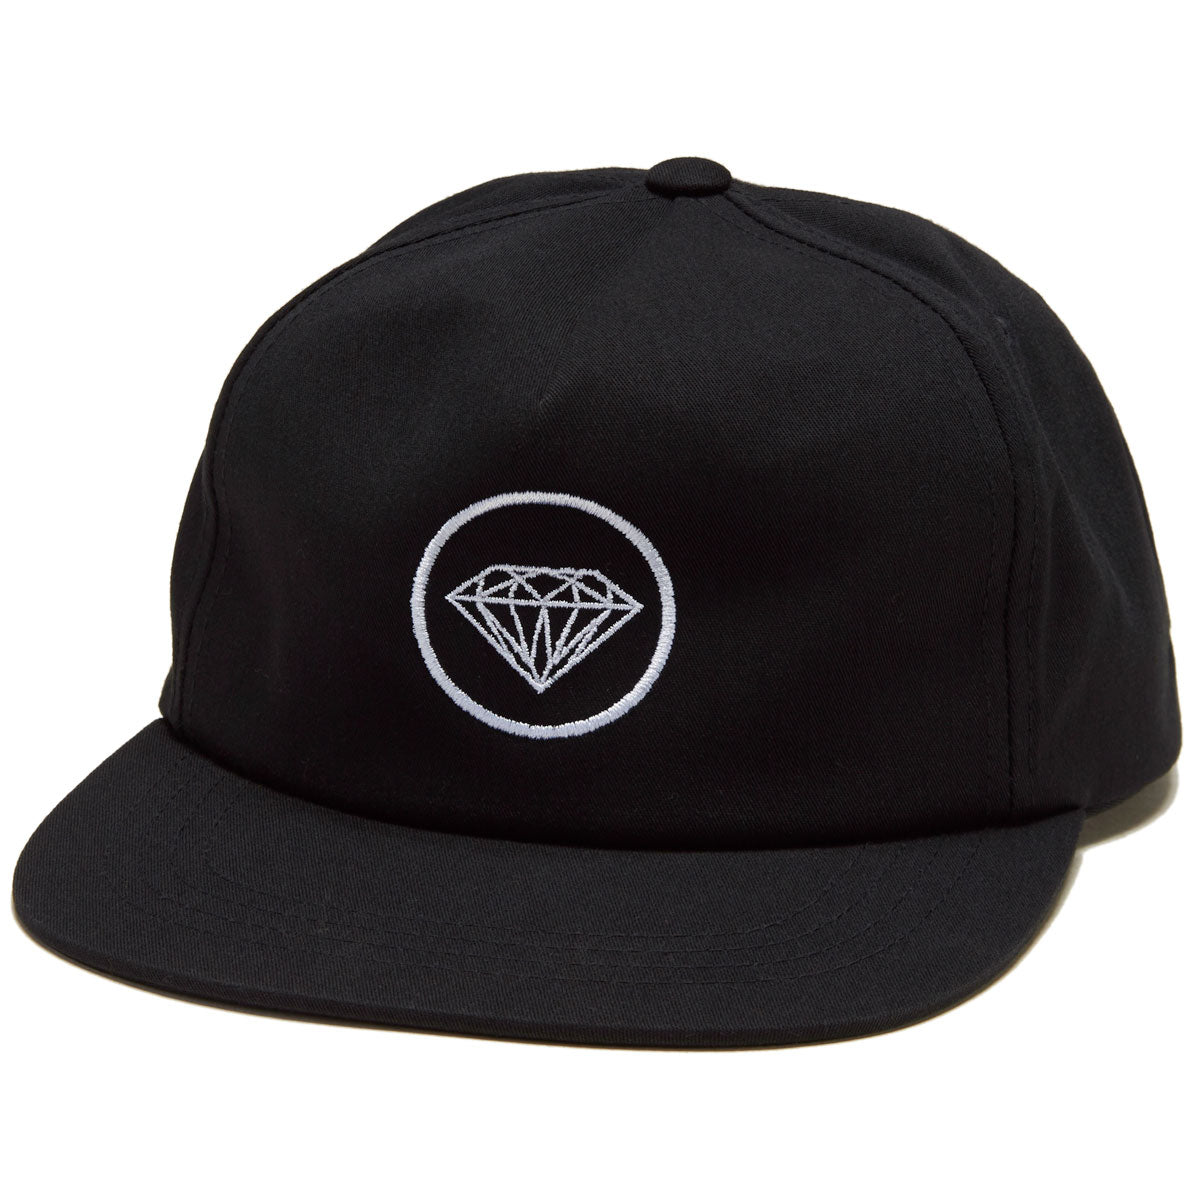 Diamond Supply Co. Brilliant Circle Snapback Hat - Black image 1